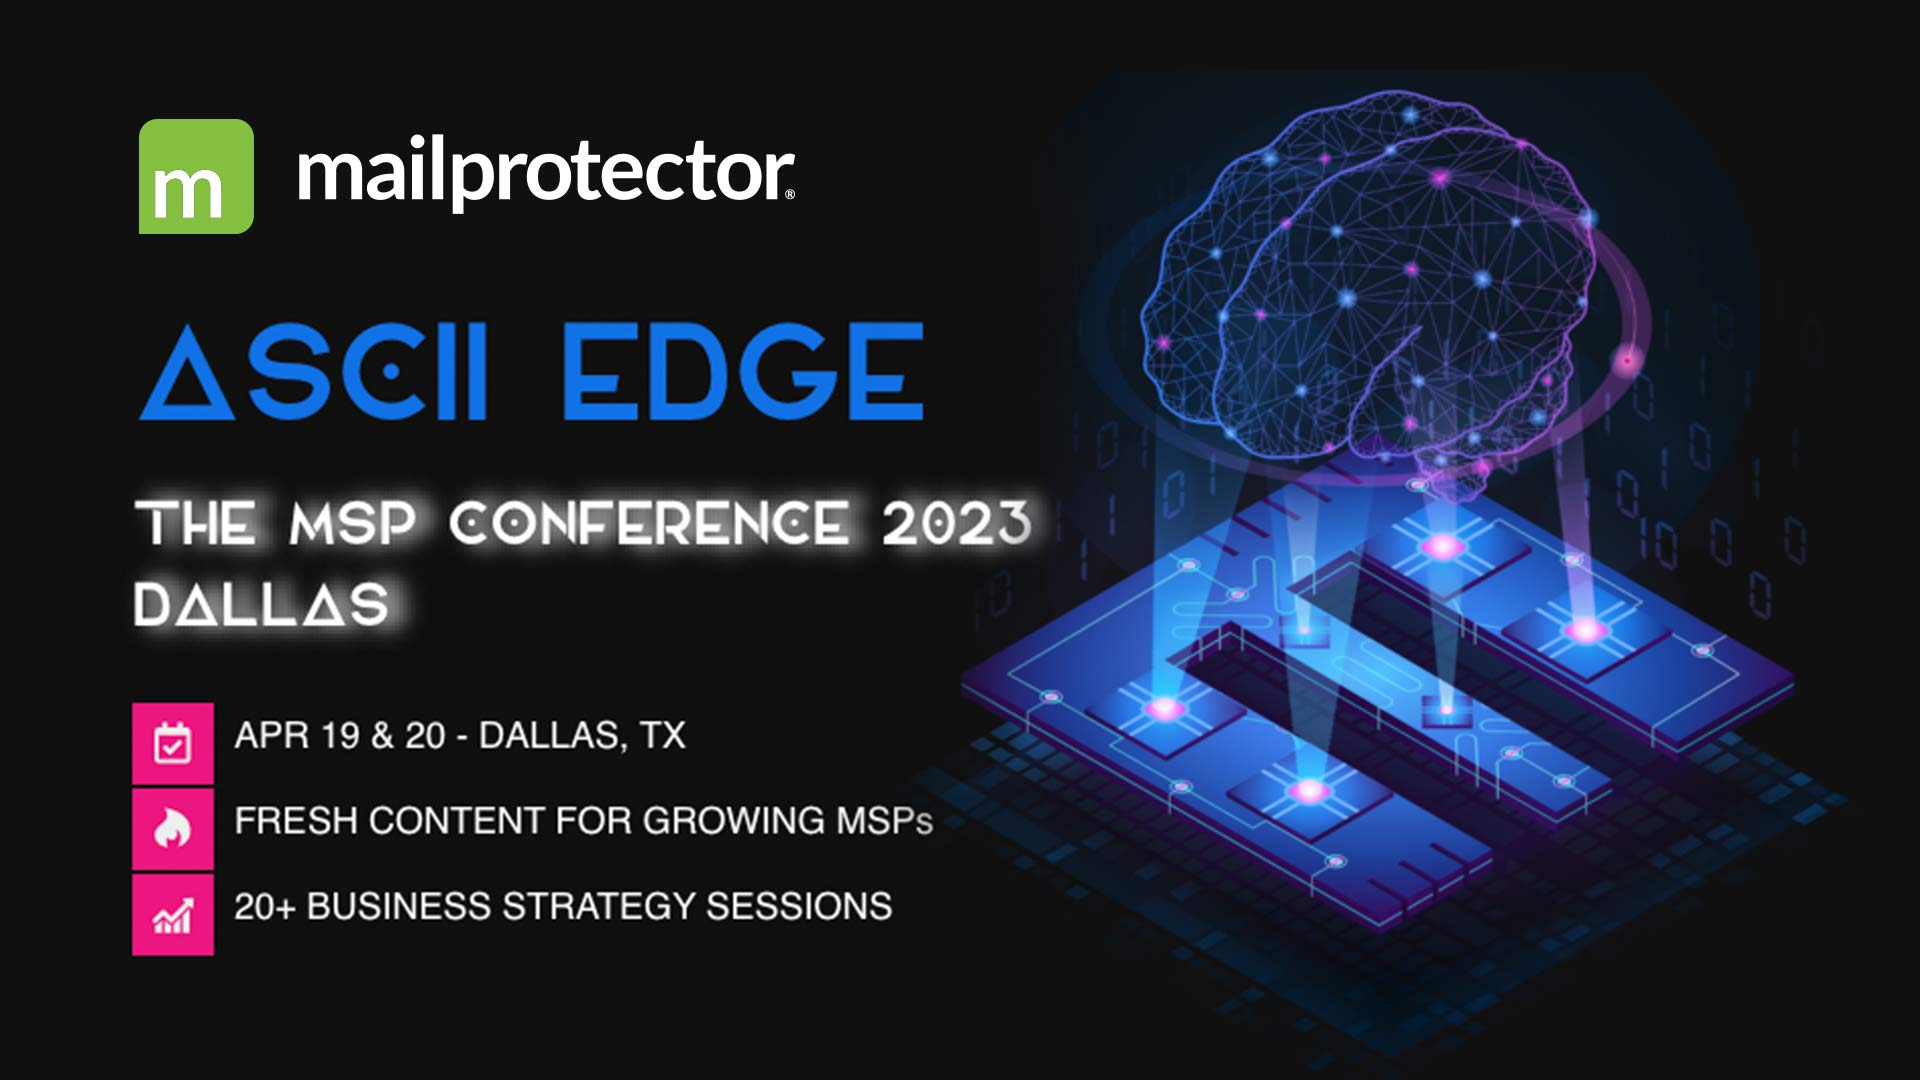 ASCII Edge MSP Conference 2023 Dallas TX Mailprotector Email Security Vendor